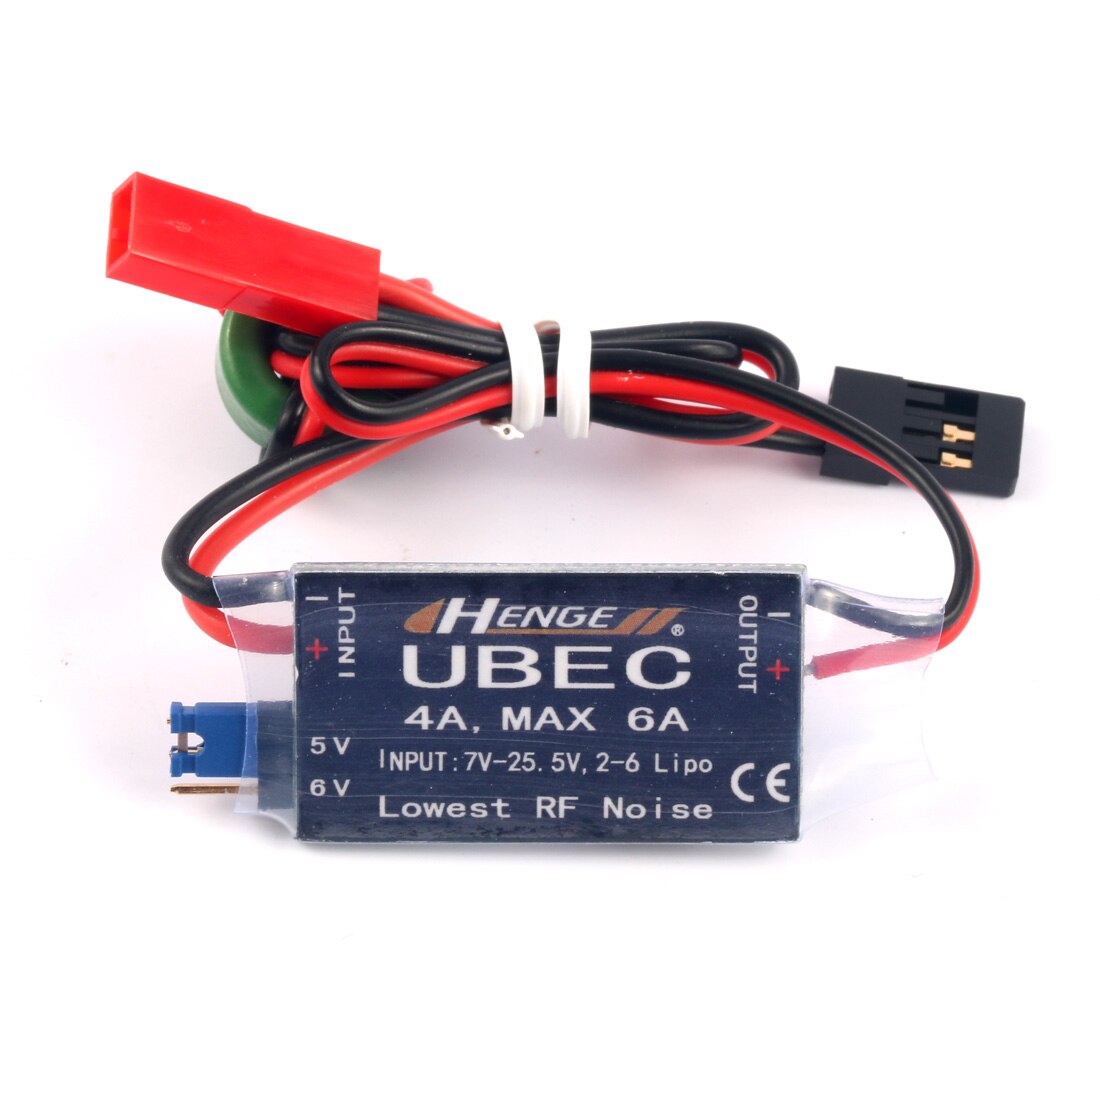 HENGE 4A UBEC Է 7V-25.5V 2-6S Lipo  5V 6V / ..